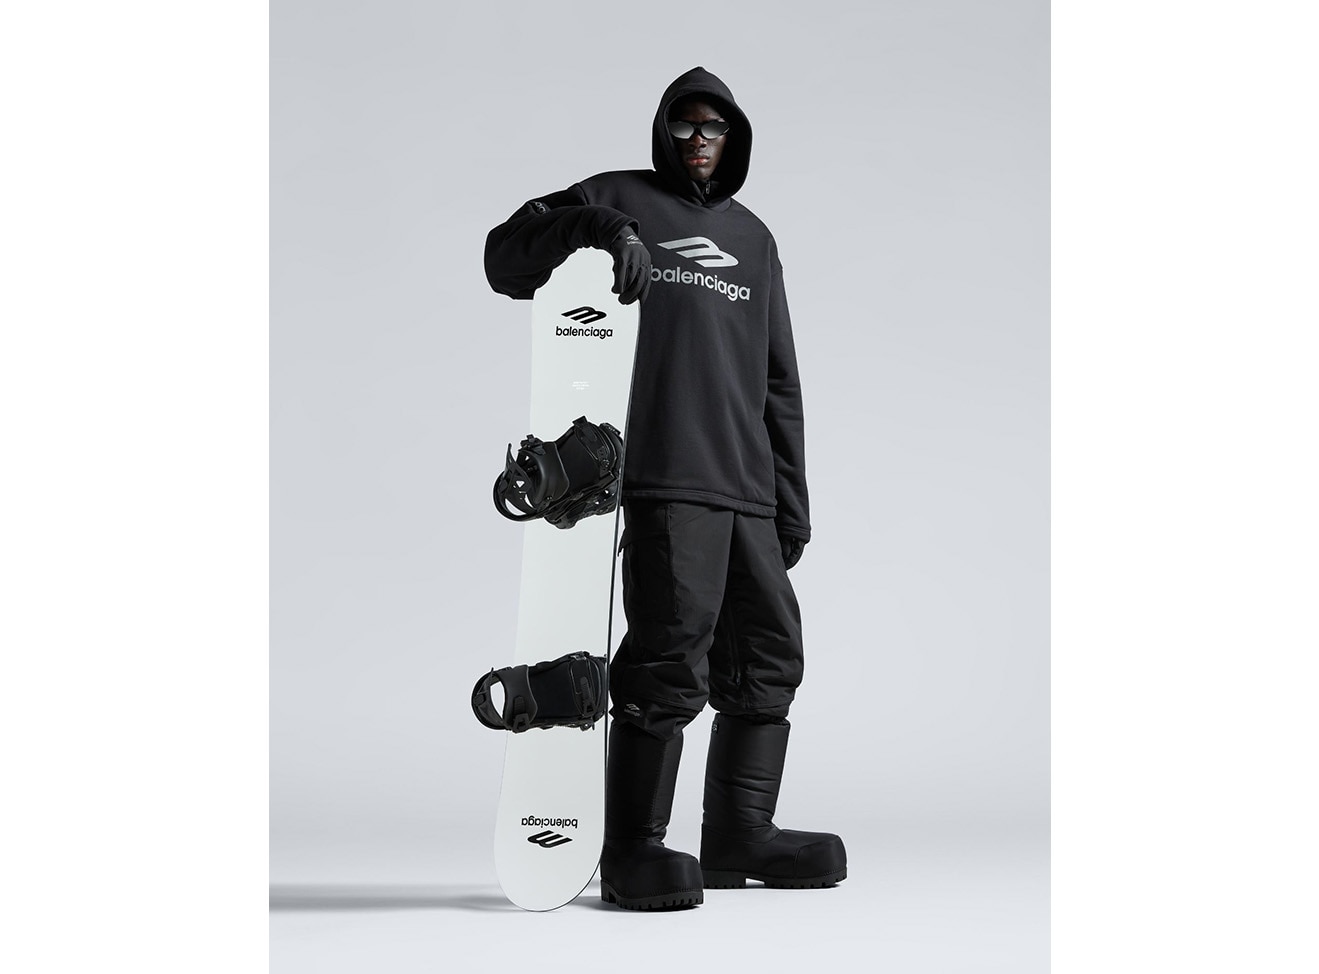 A close up of a model in all black Balenciaga snow gear holding a snowboard. 